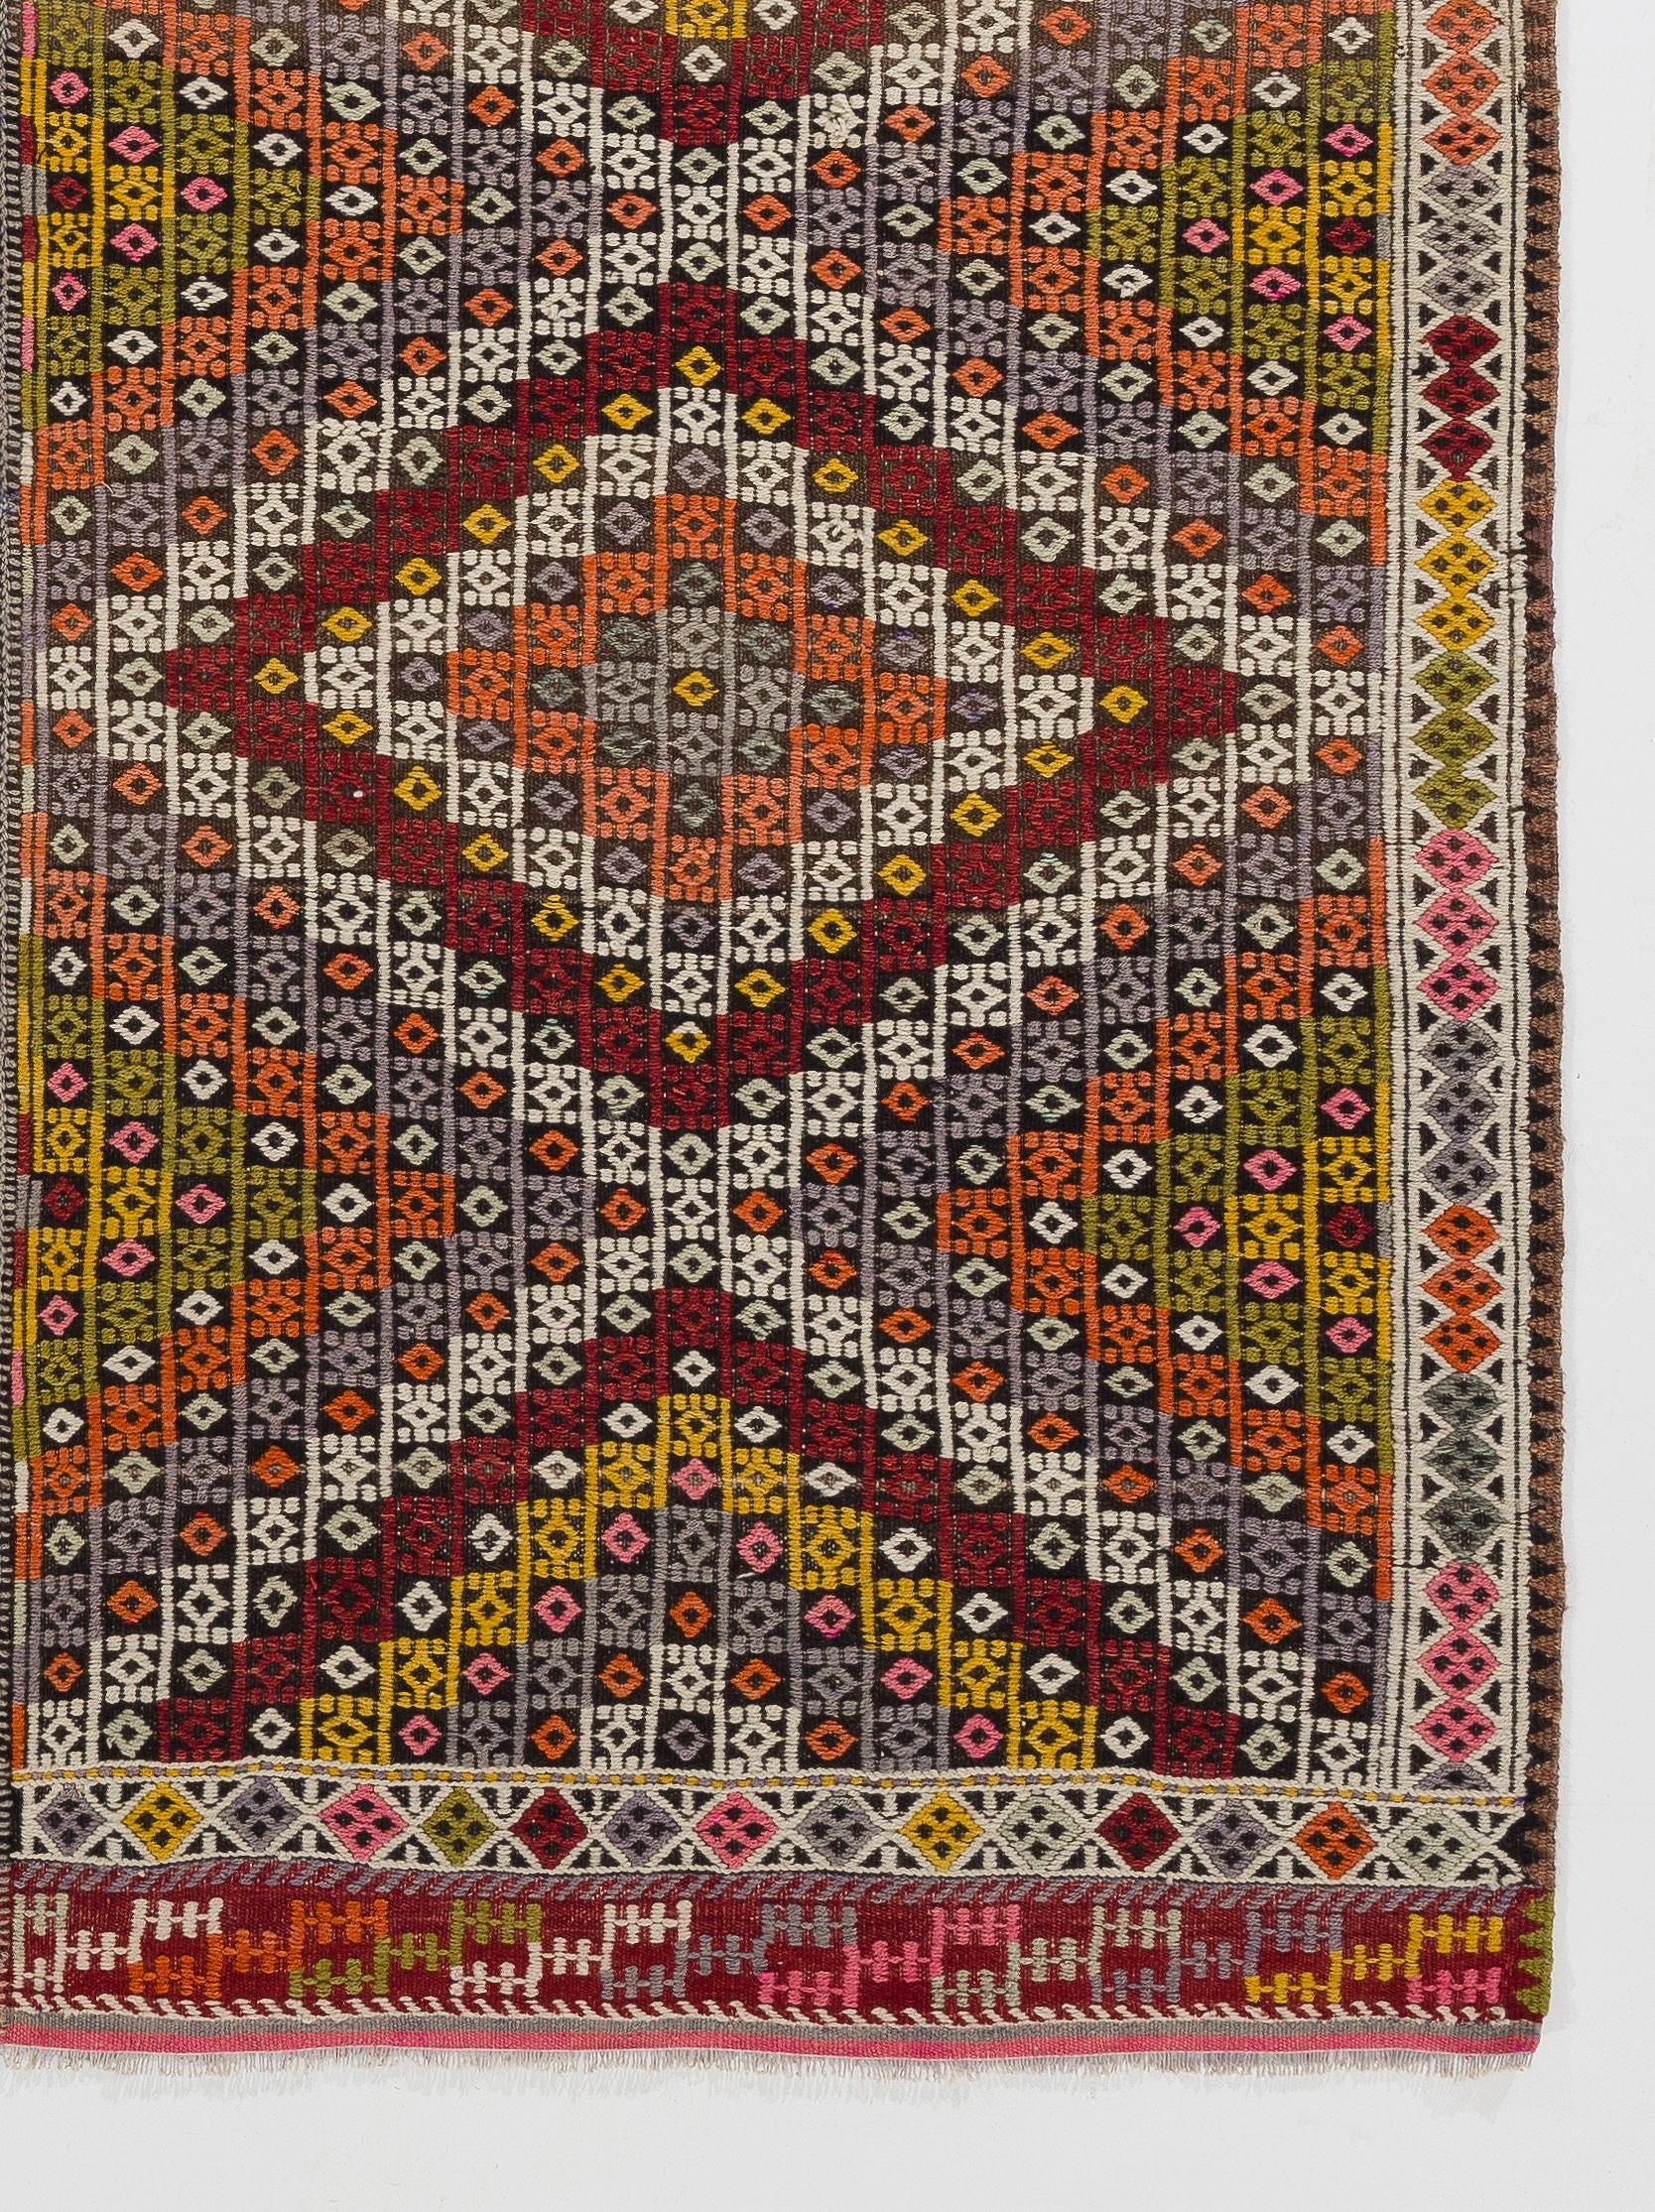 Wool 6x8 Ft Multicolored Hand-Woven Turkish Jijim Kilim. Vintage Geometric Design Rug For Sale